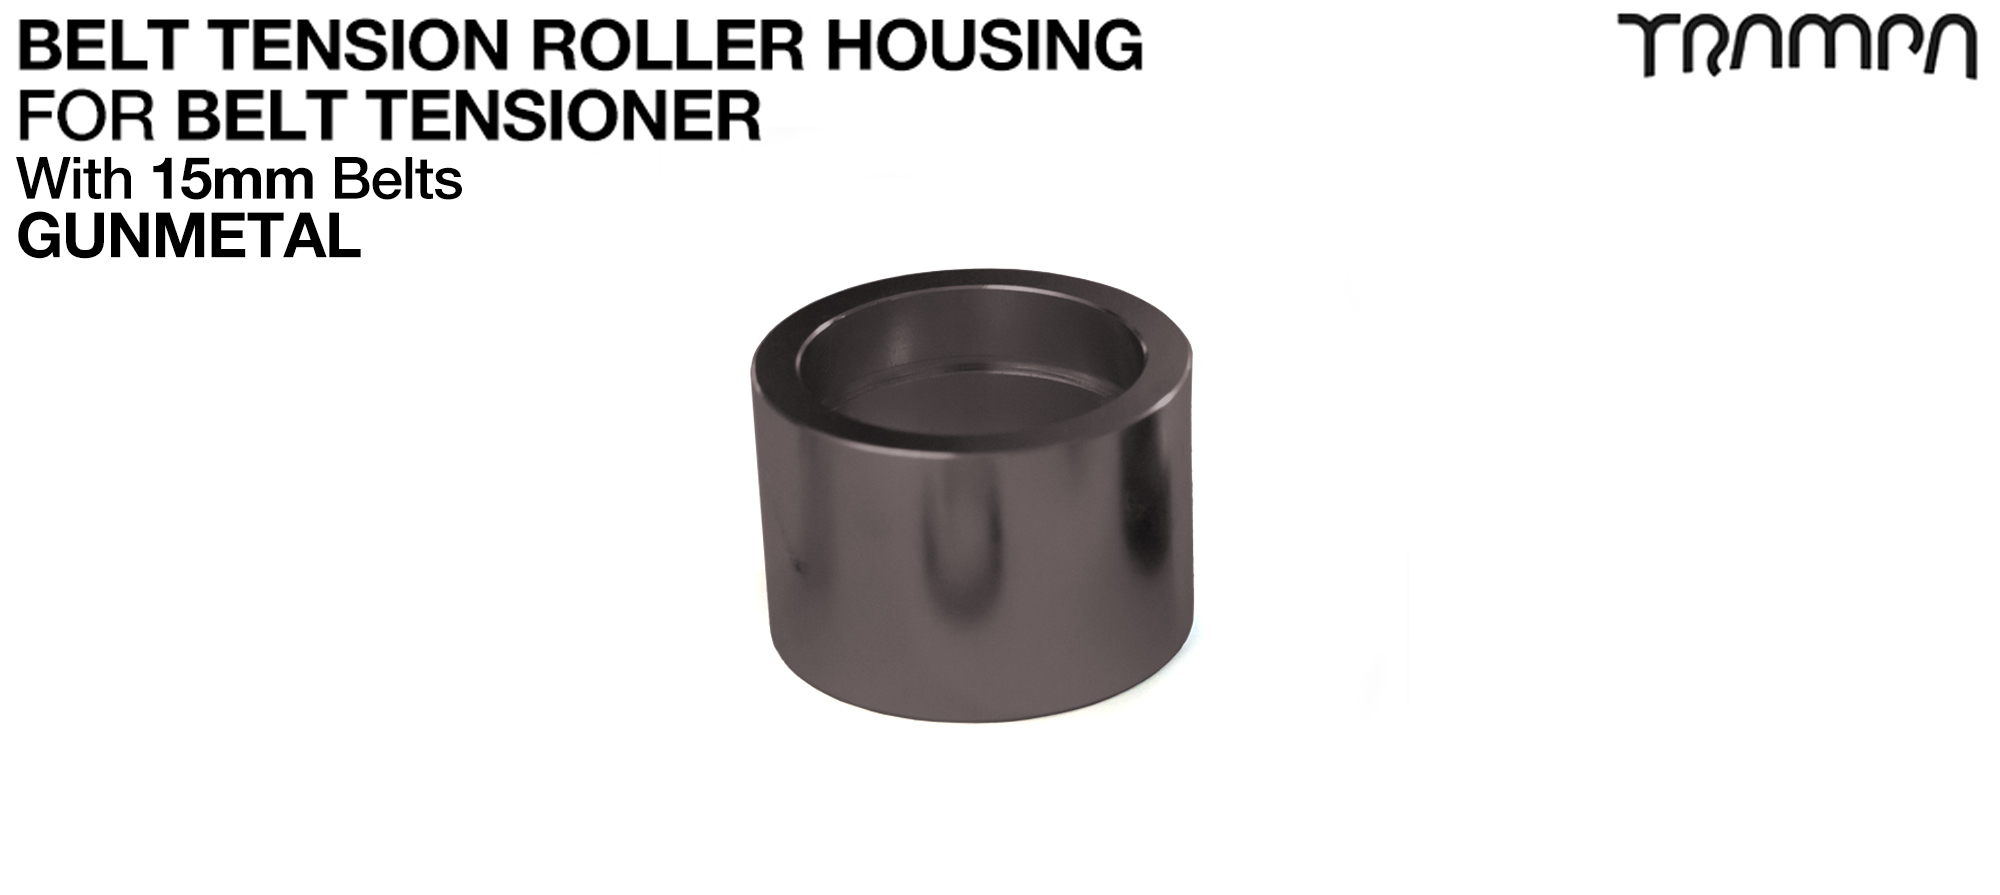 Belt Tension Roller Housing for 15mm Belts - GUNMETAL